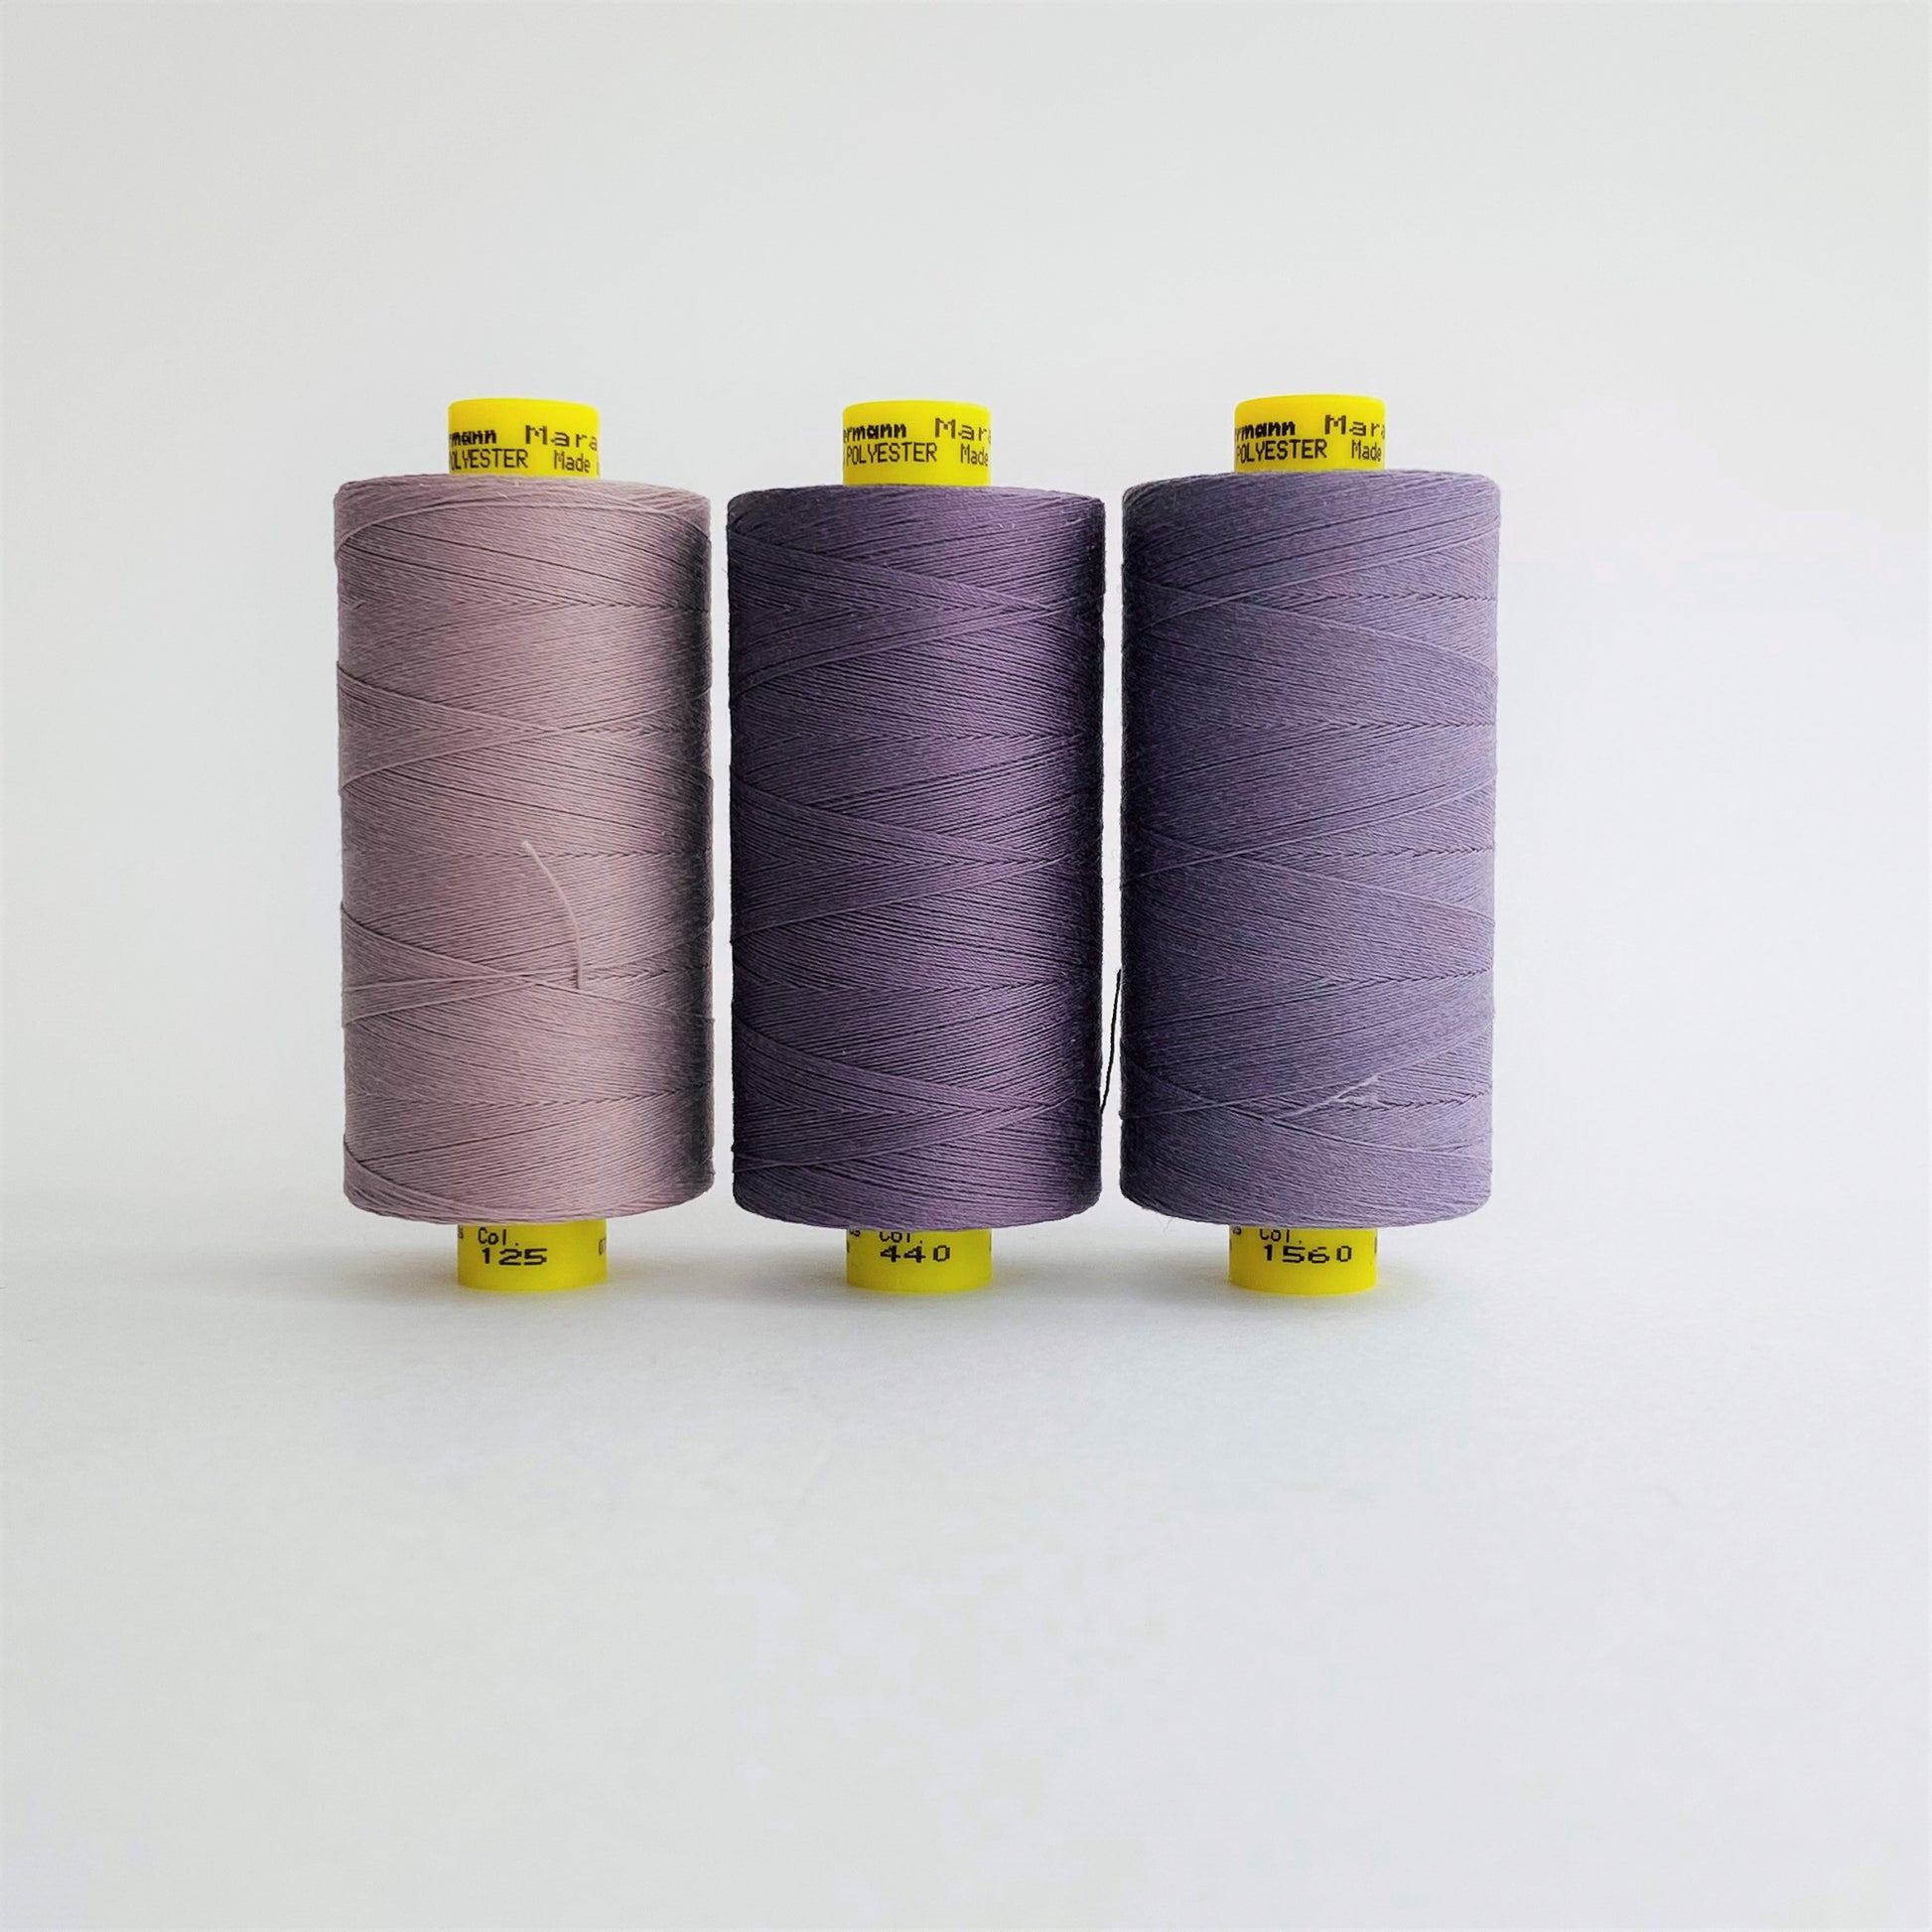 Gutermann Mara #70 Strong Sewing Thread 700m Spools (Mauve Shades) - Kleins Haberdashery